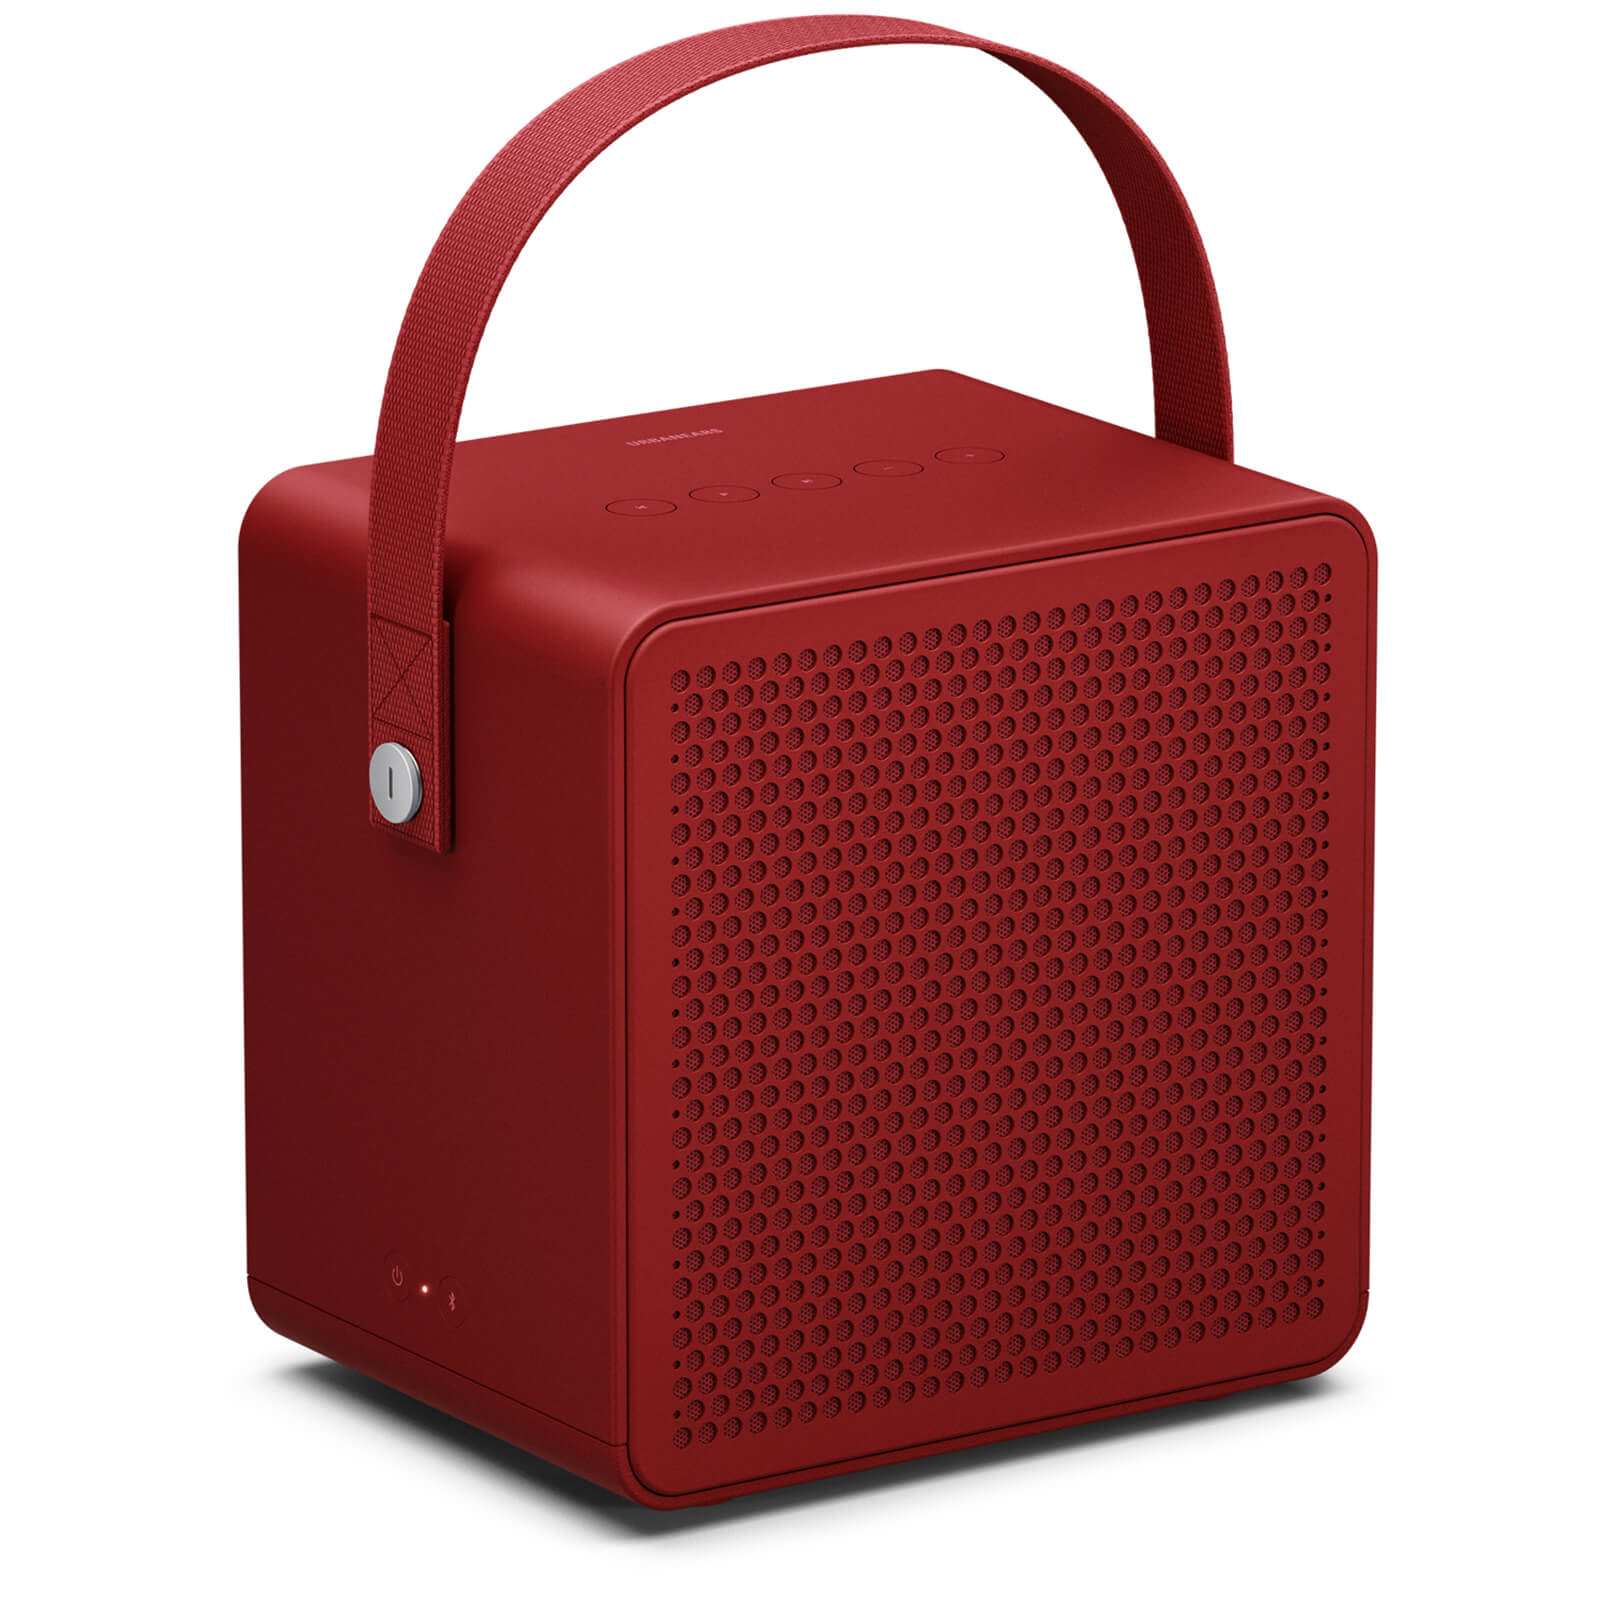 Urbanears Ralis Portable Bluetooth Speaker - Red